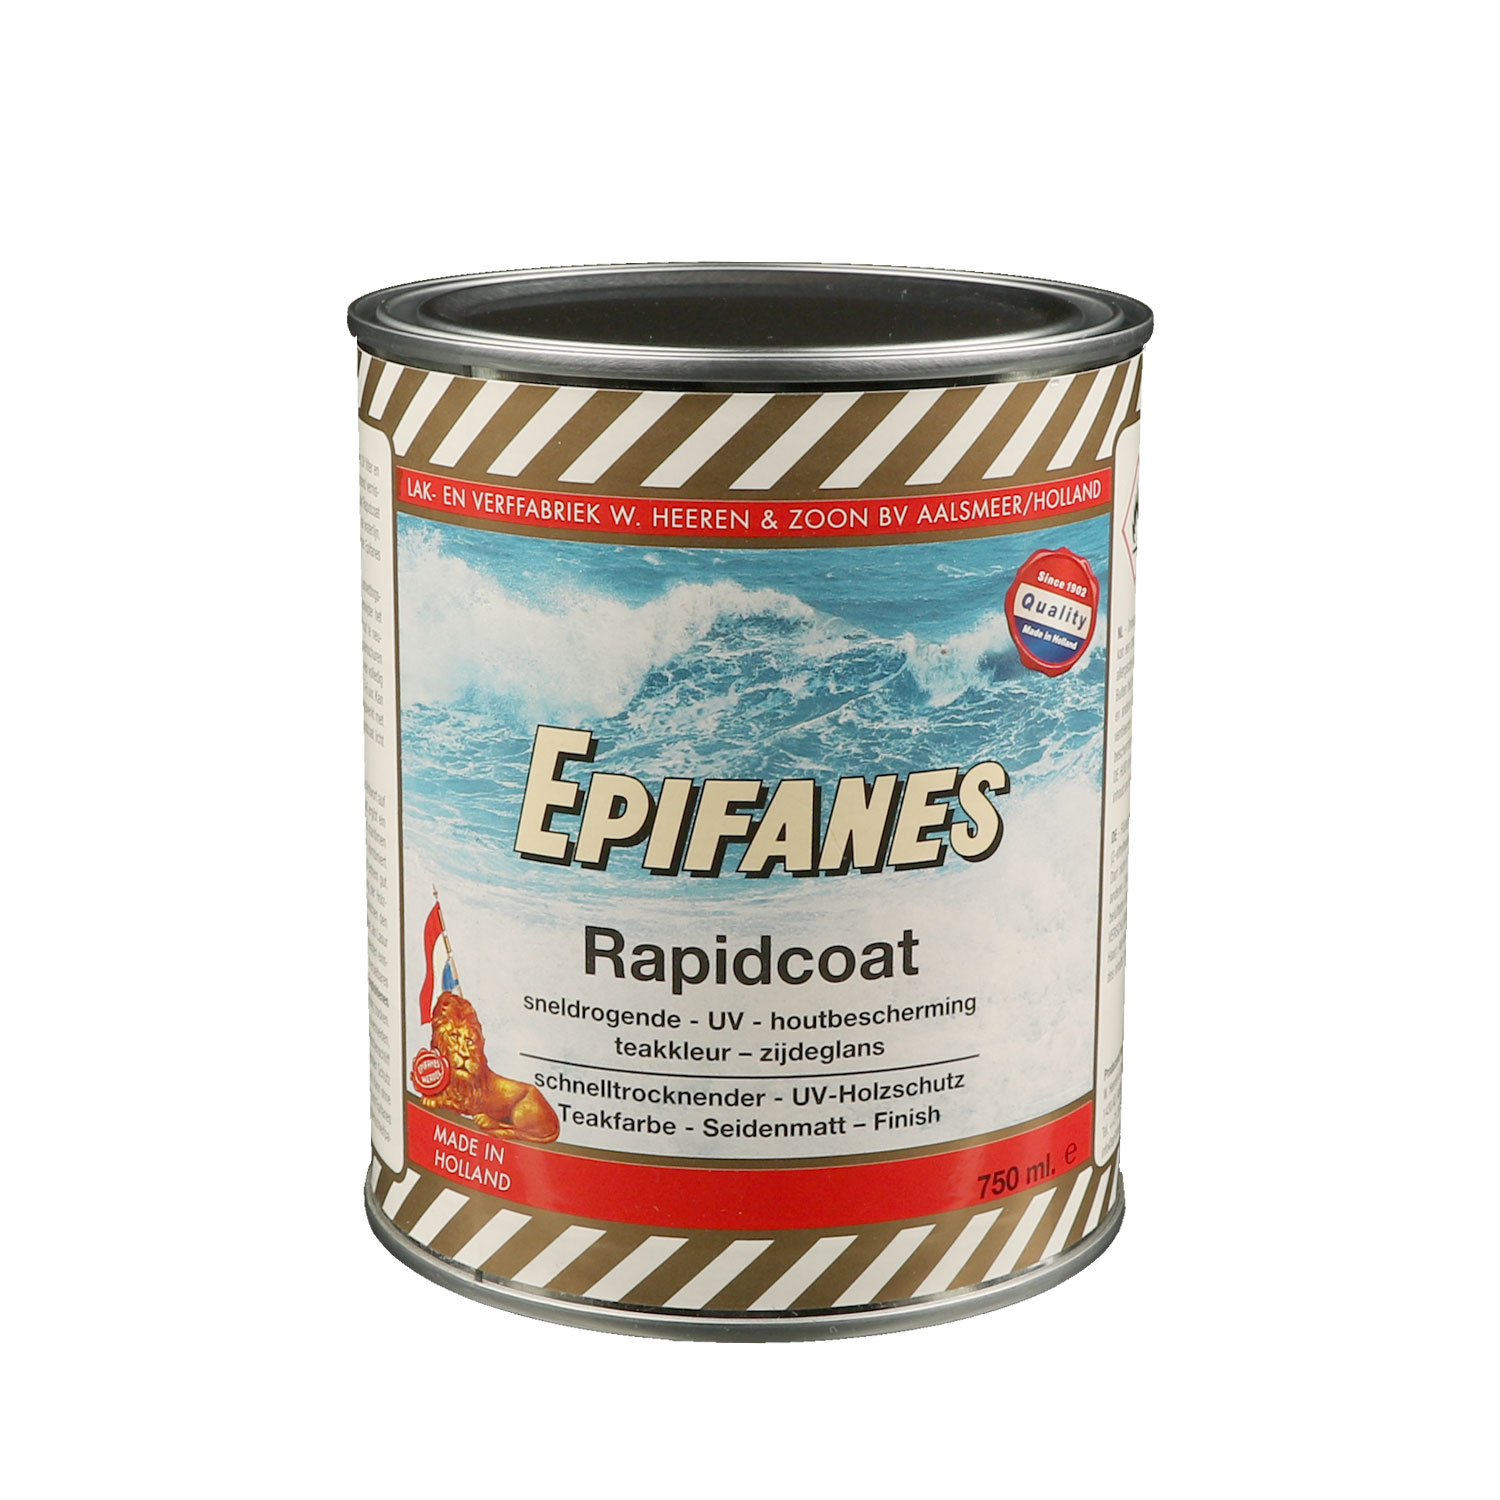 Epifanes Rapidcoat mattglänzender Öllack E1-12